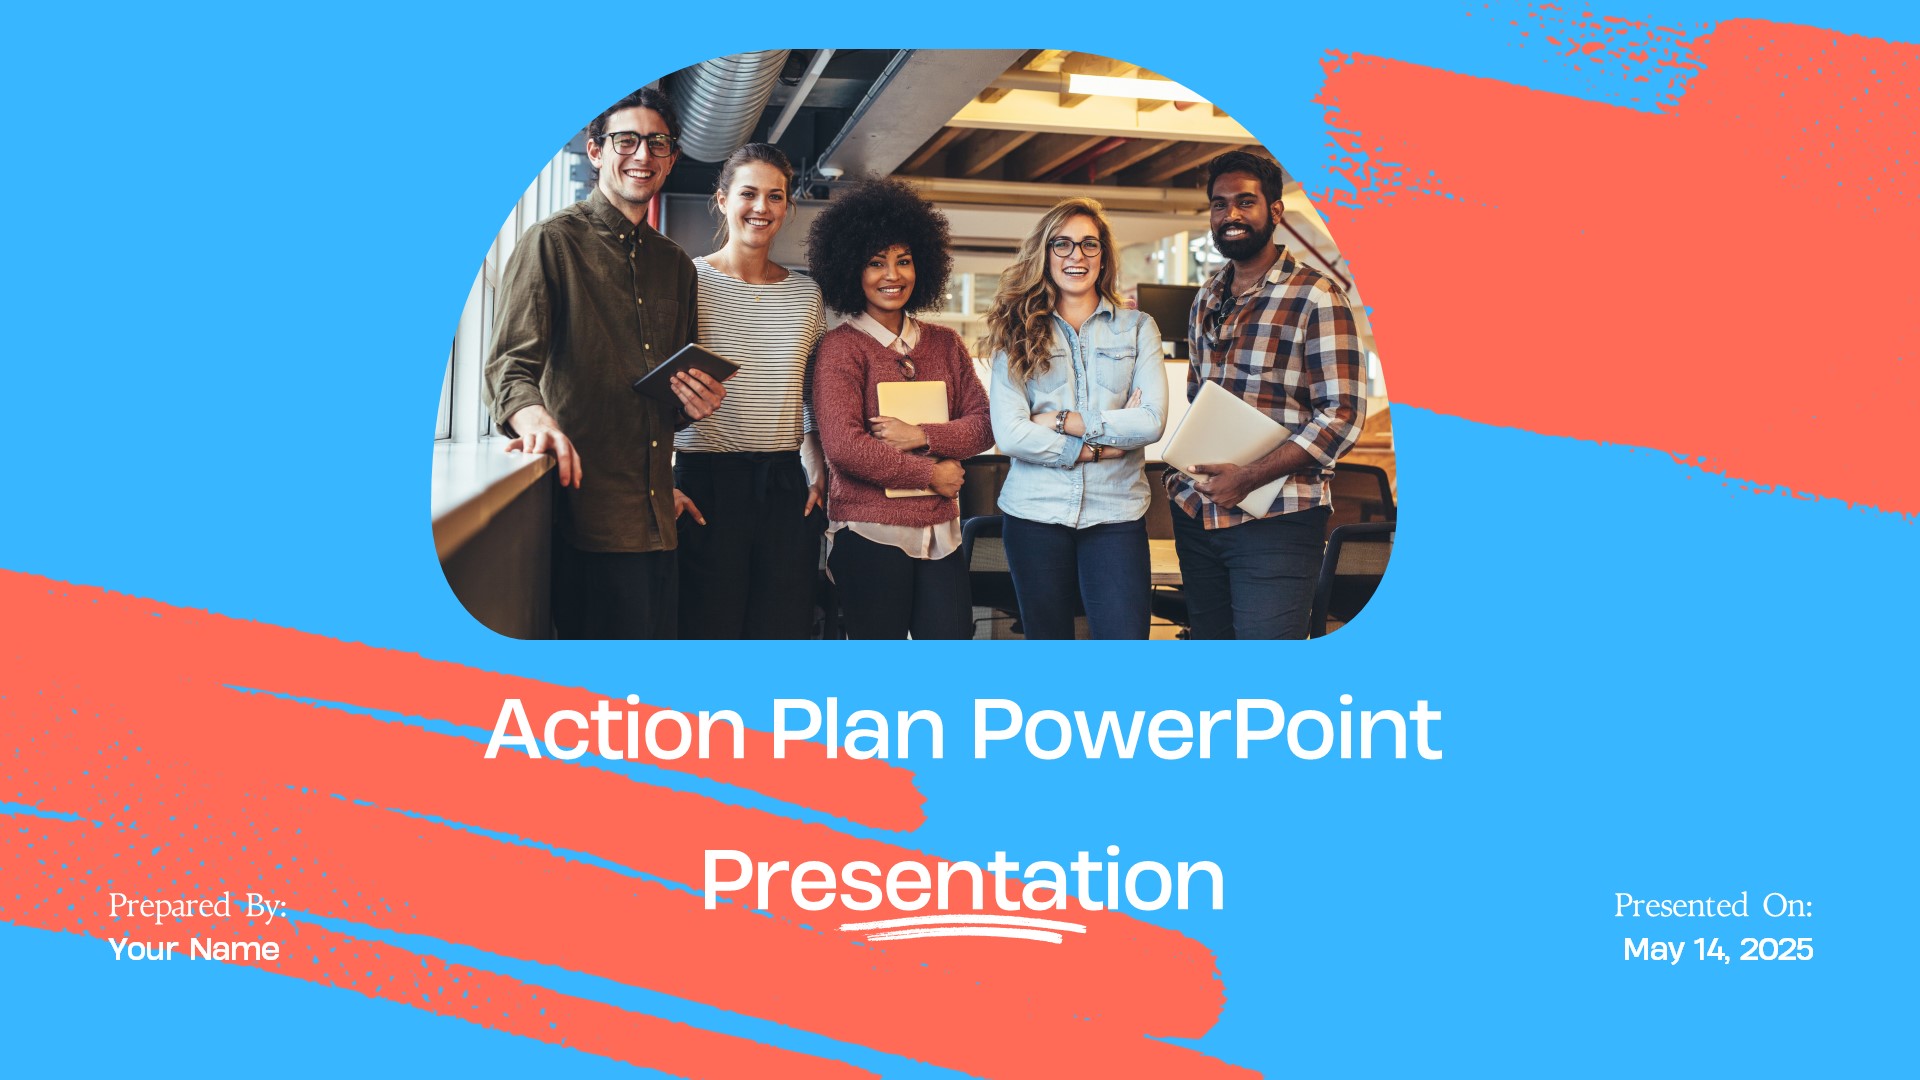 Action Plan PowerPoint Presentation